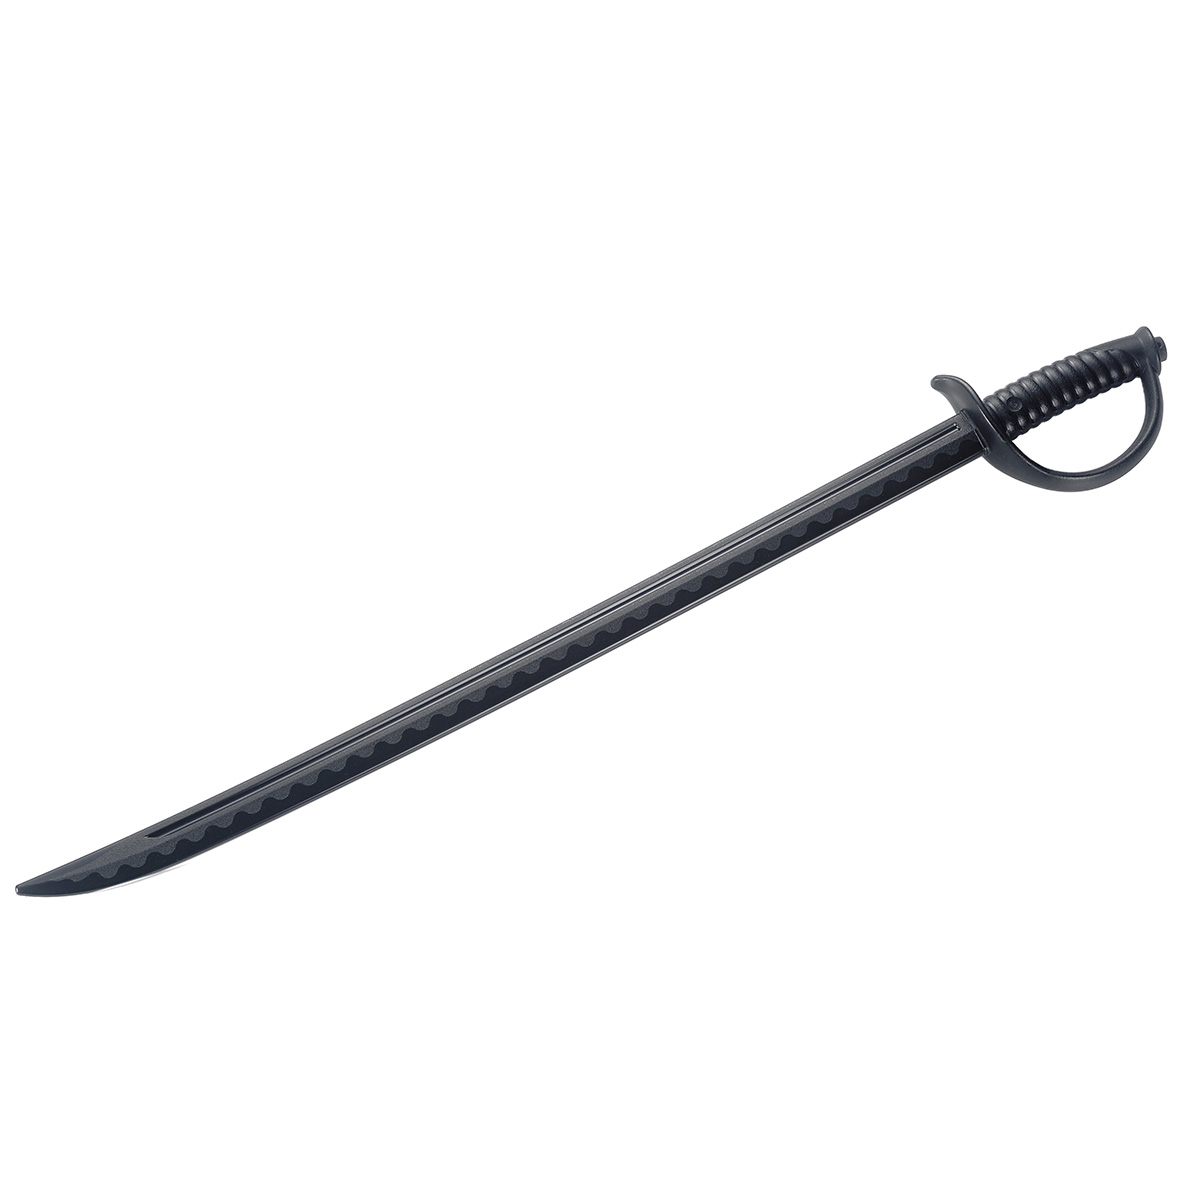 Black Polypropylene Saber Sword - 35.4" - Click Image to Close